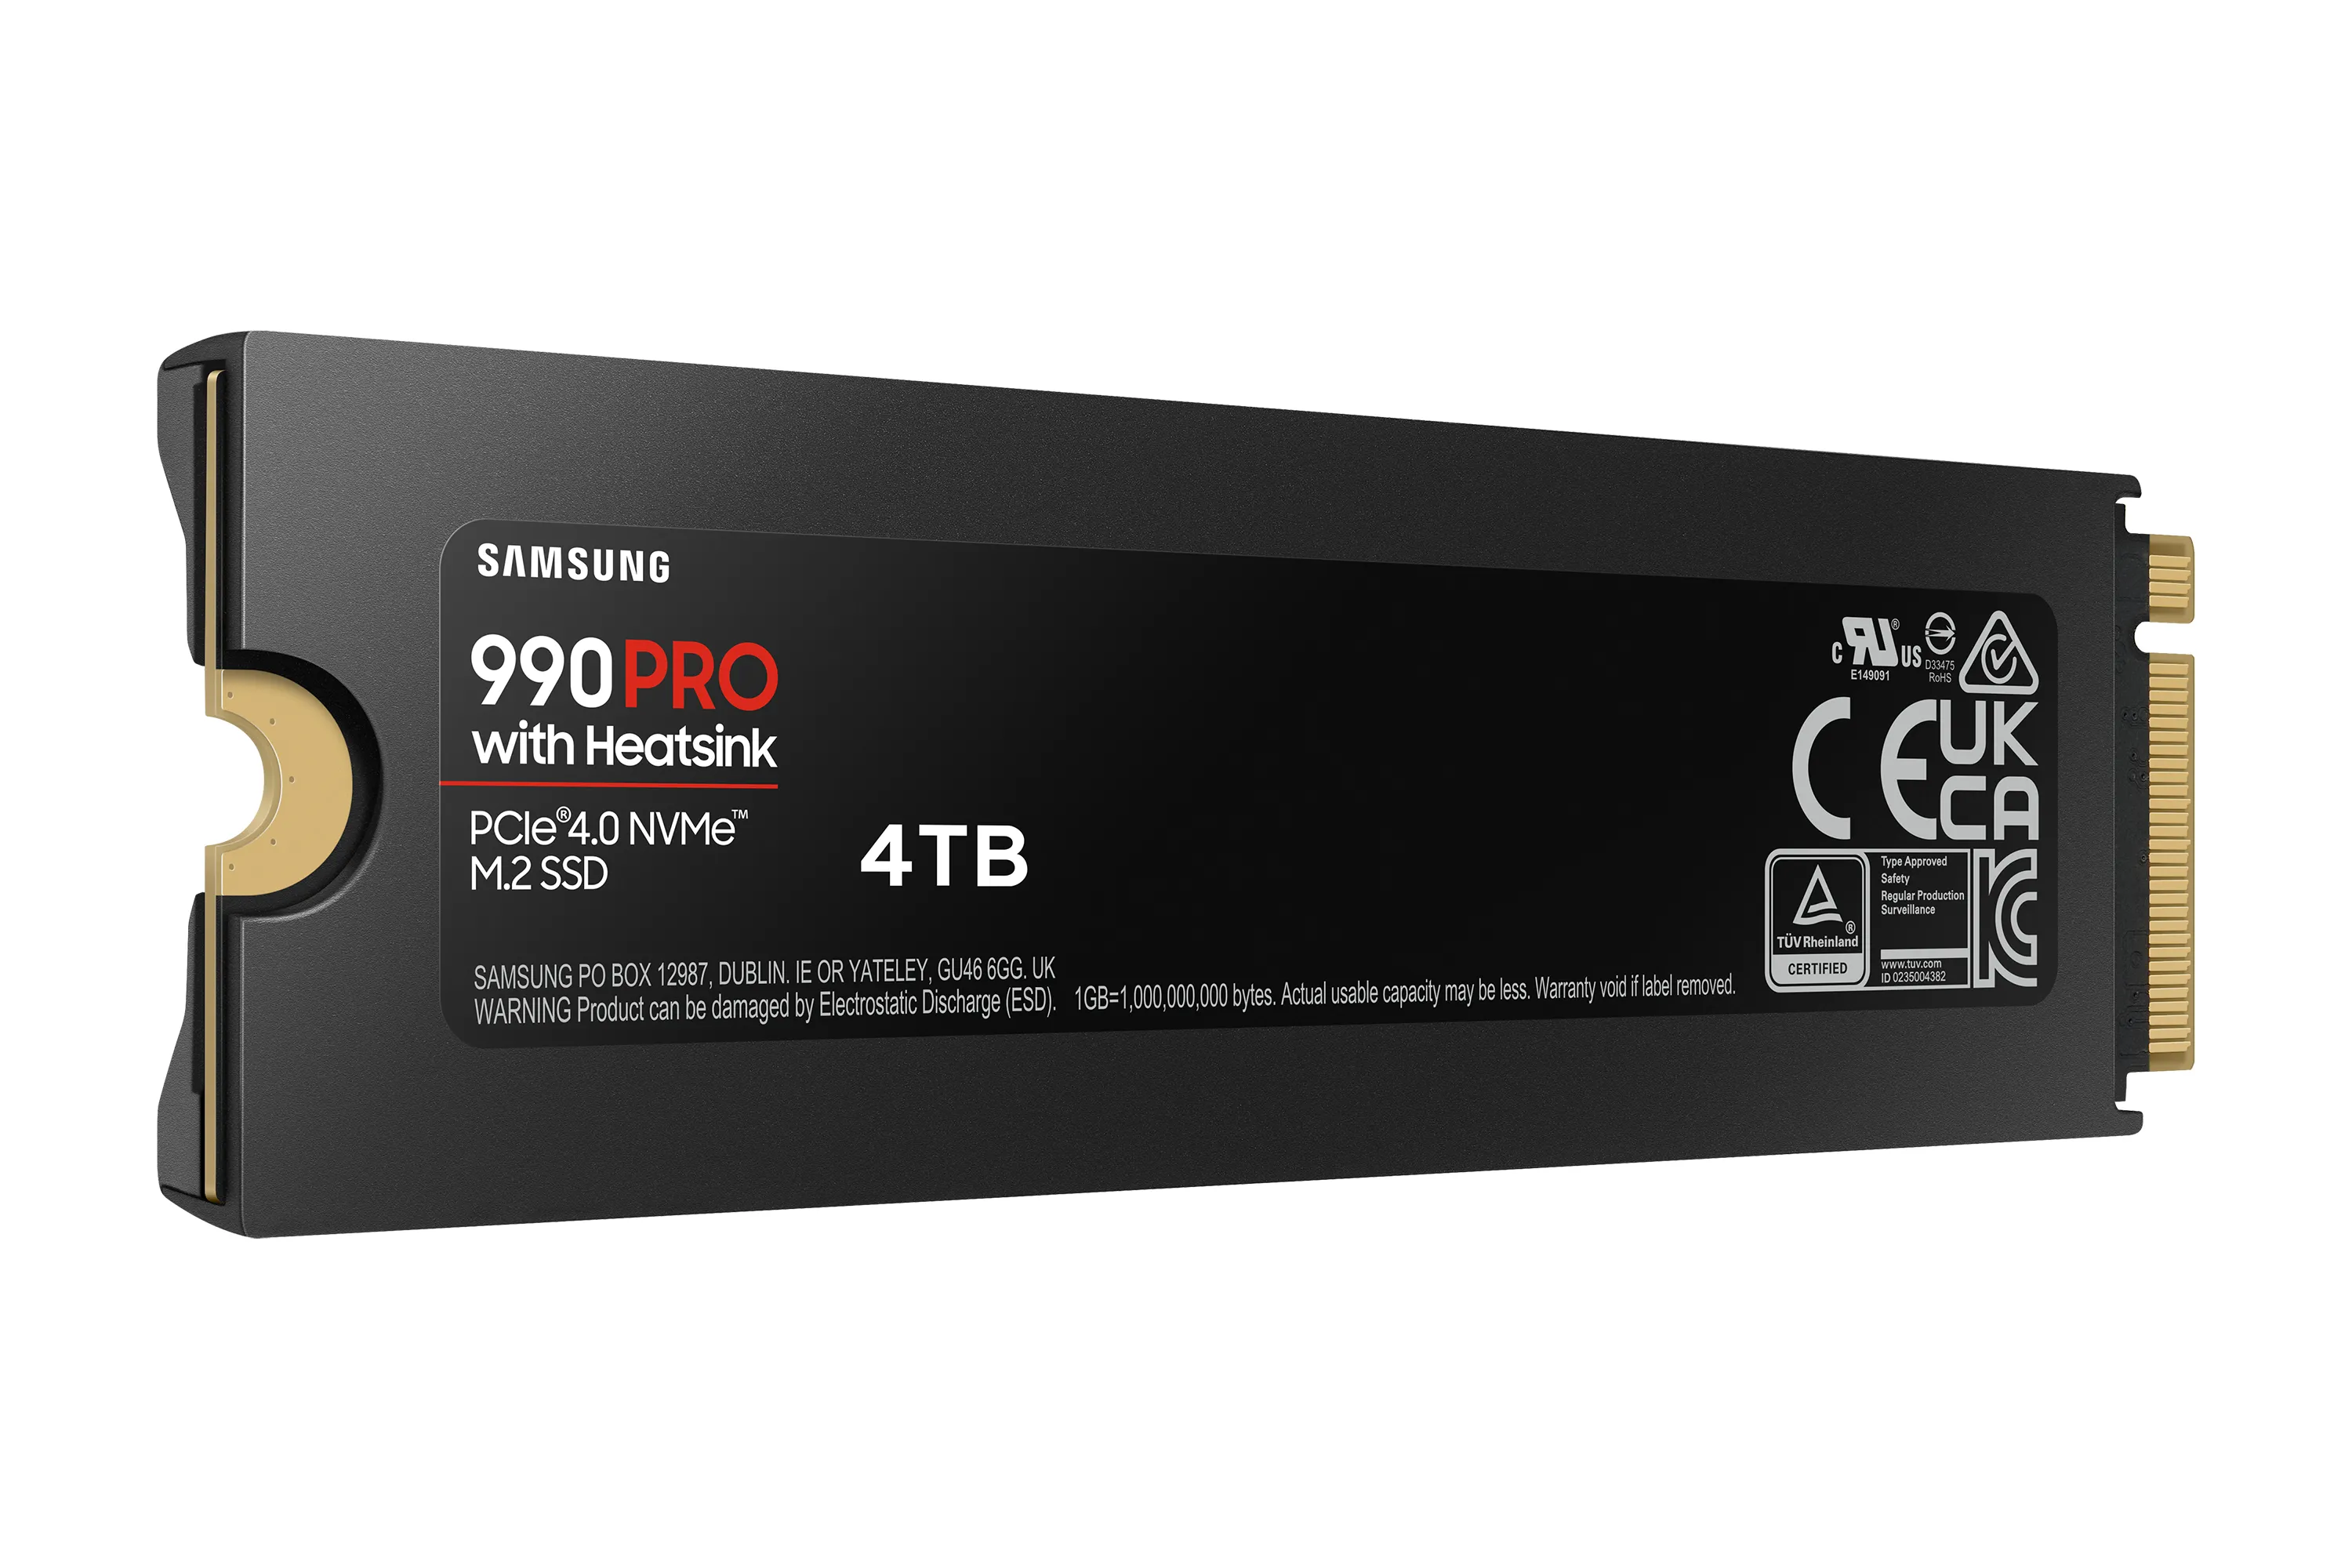 Vente SAMSUNG 990 Pro SSD 4To M.2 2280 PCIe Samsung au meilleur prix - visuel 6